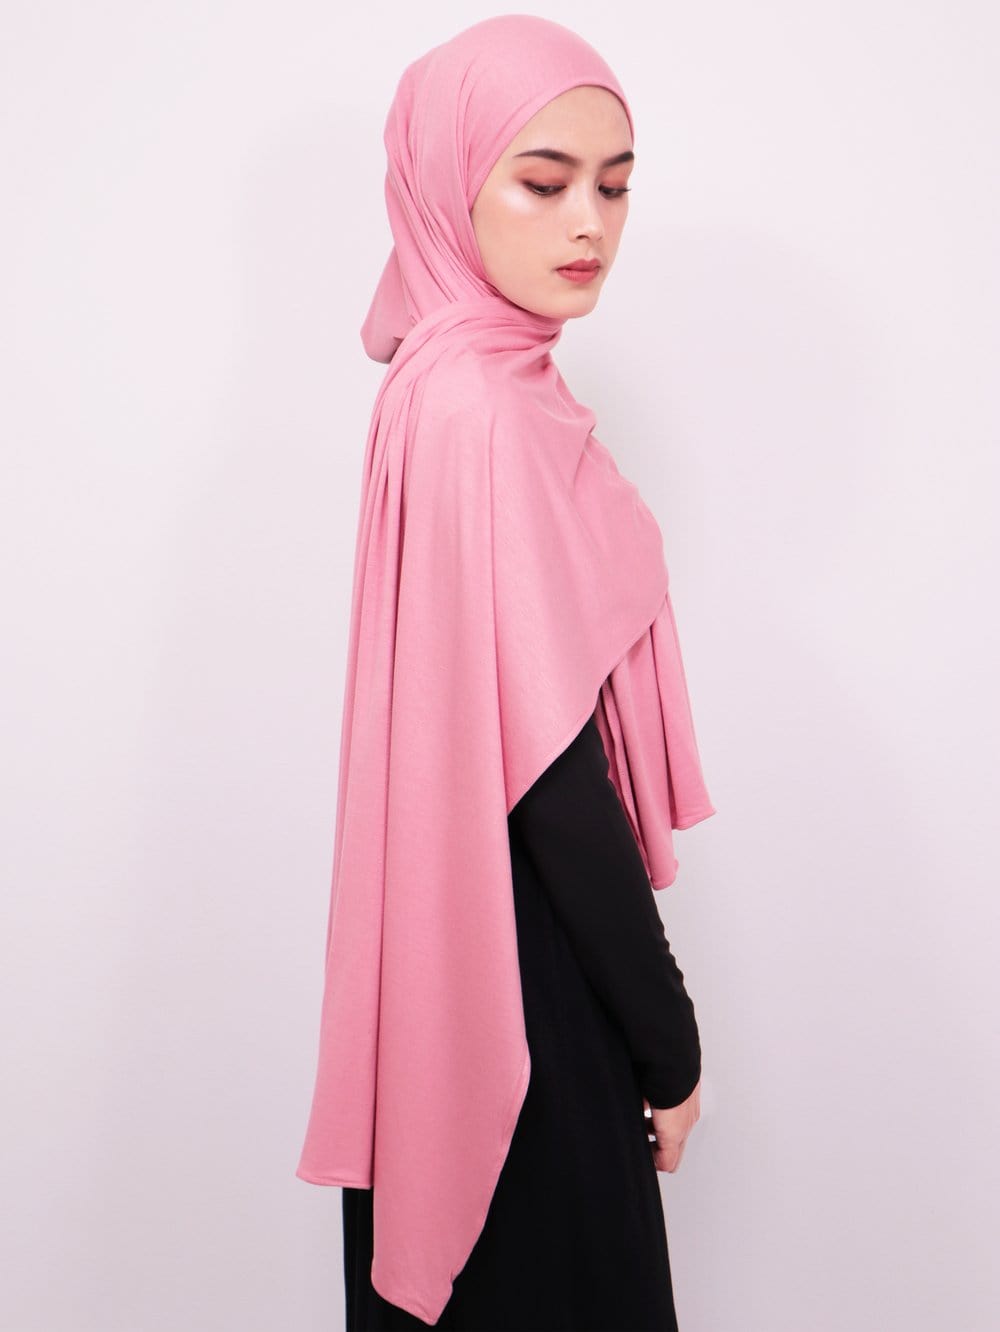 Daw Project DH068 Hijab Pashmina instan Pink